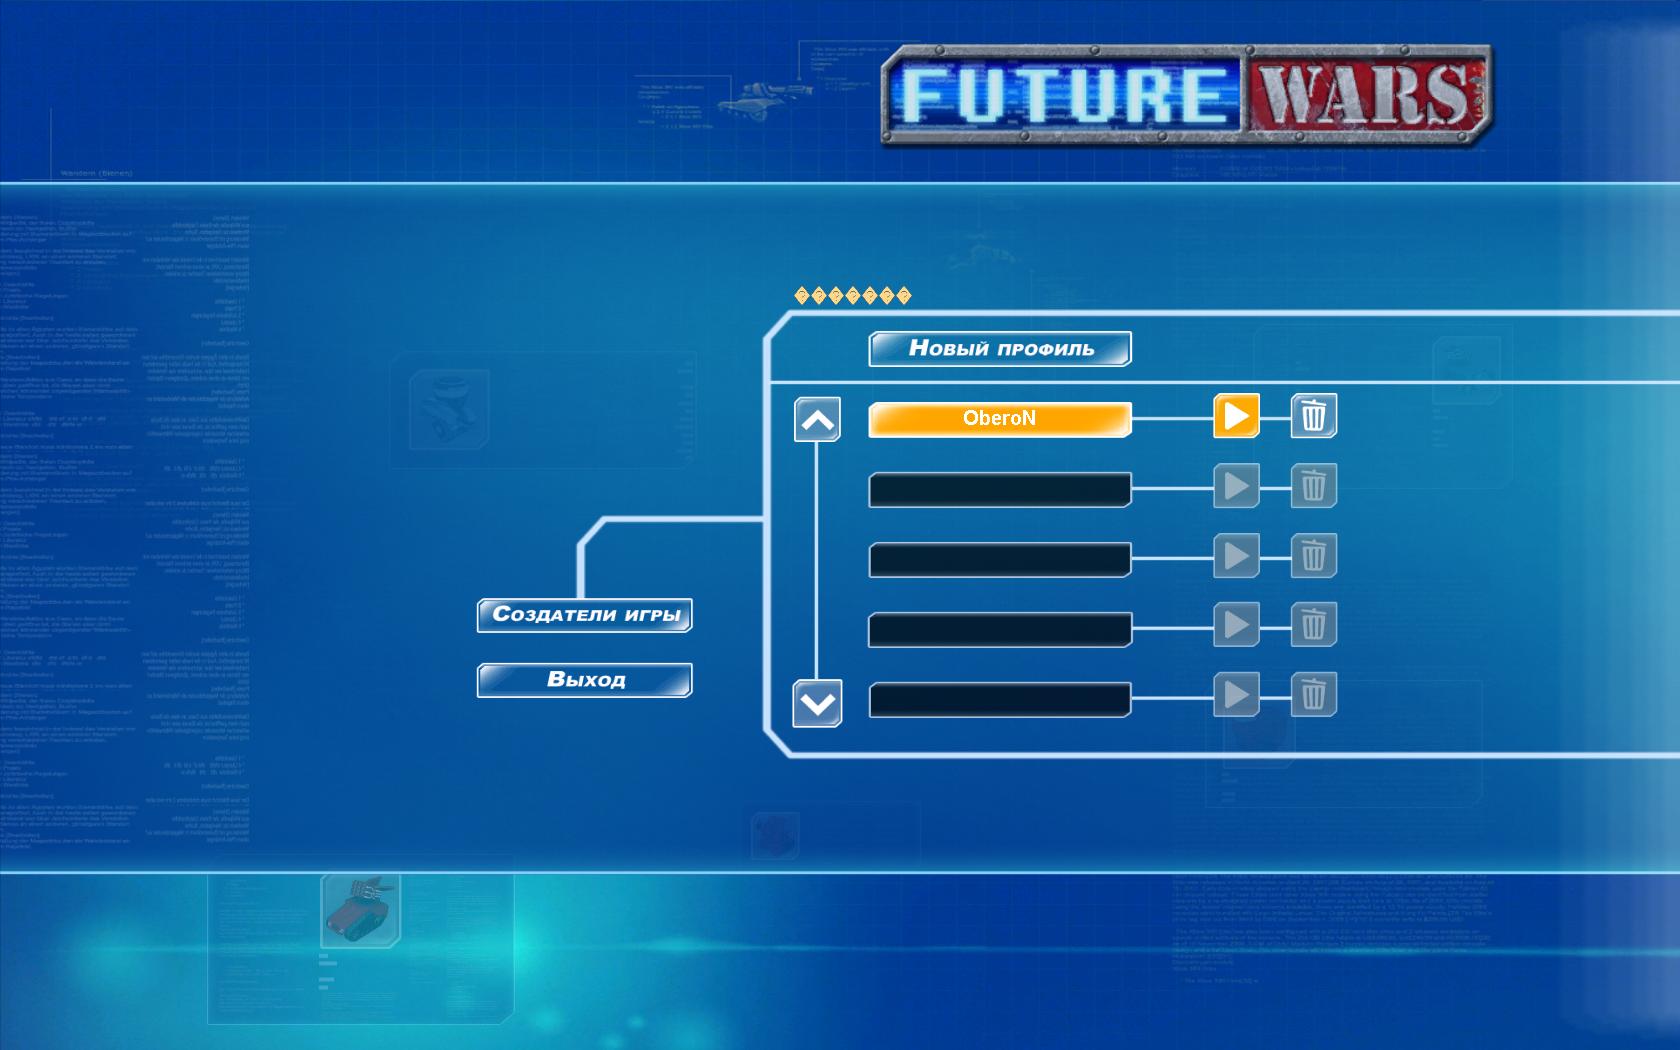 Future Wars | Арена Будущего